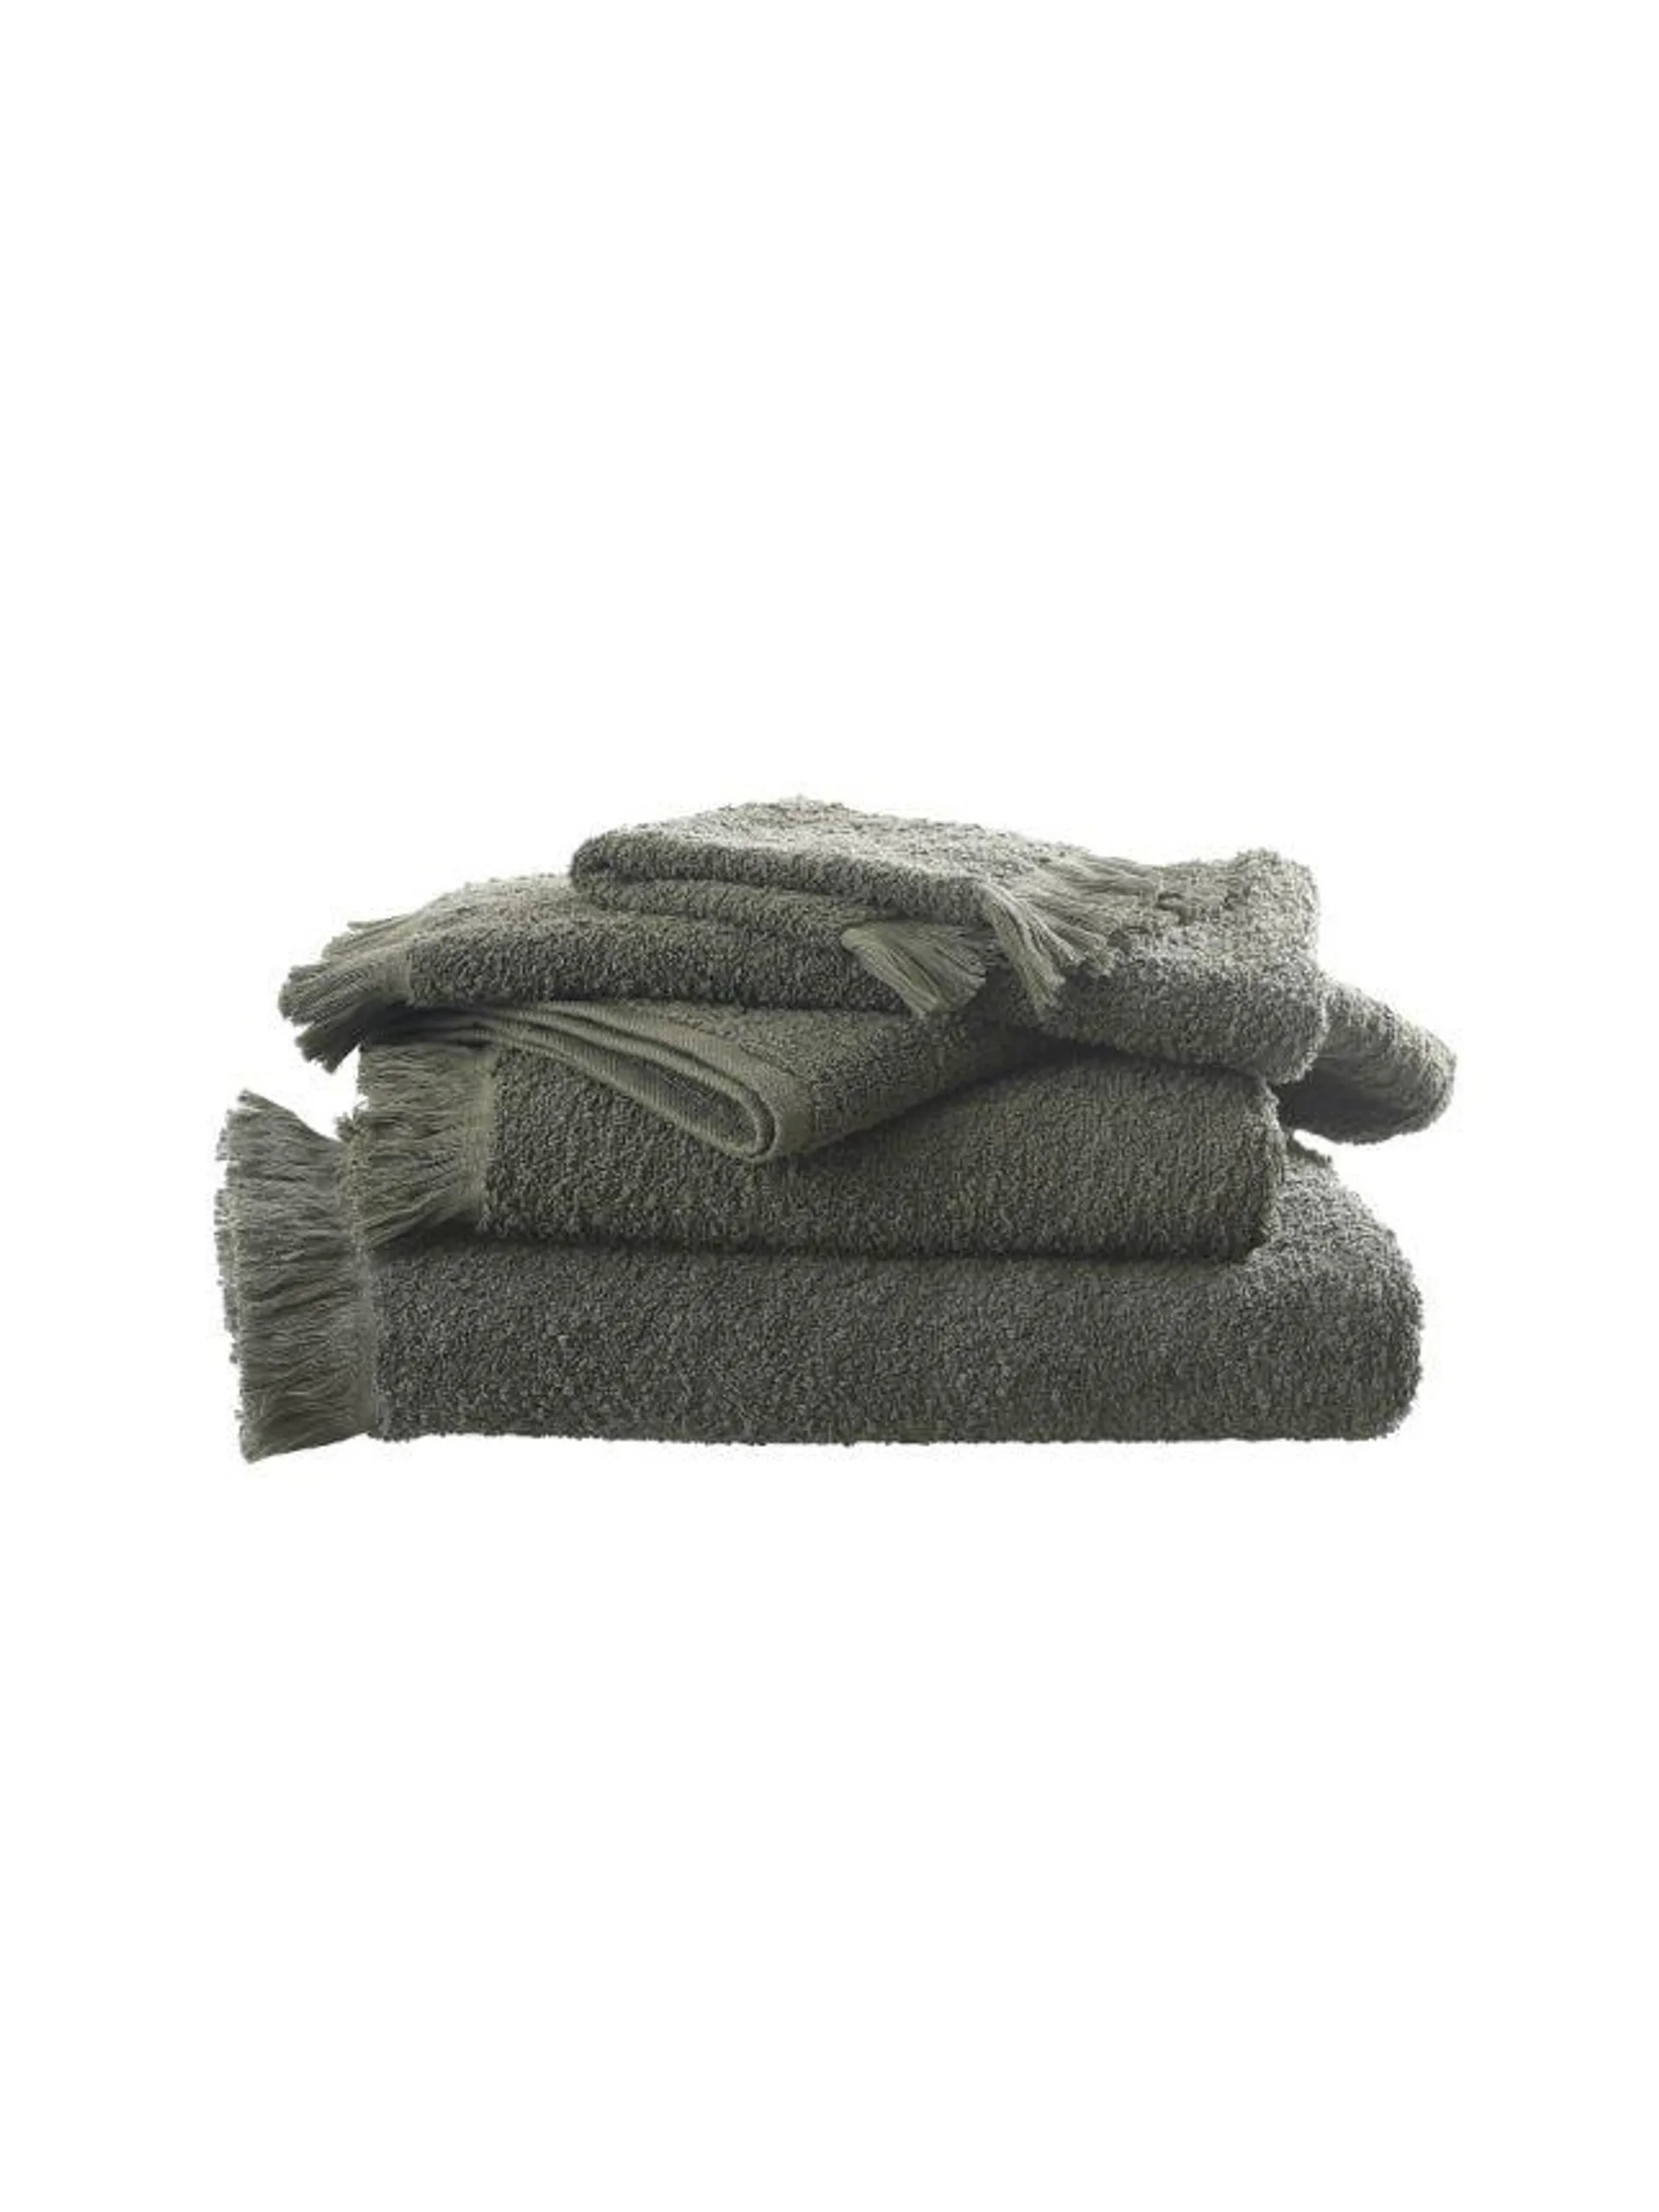 Tusca Lichen Towel Collection